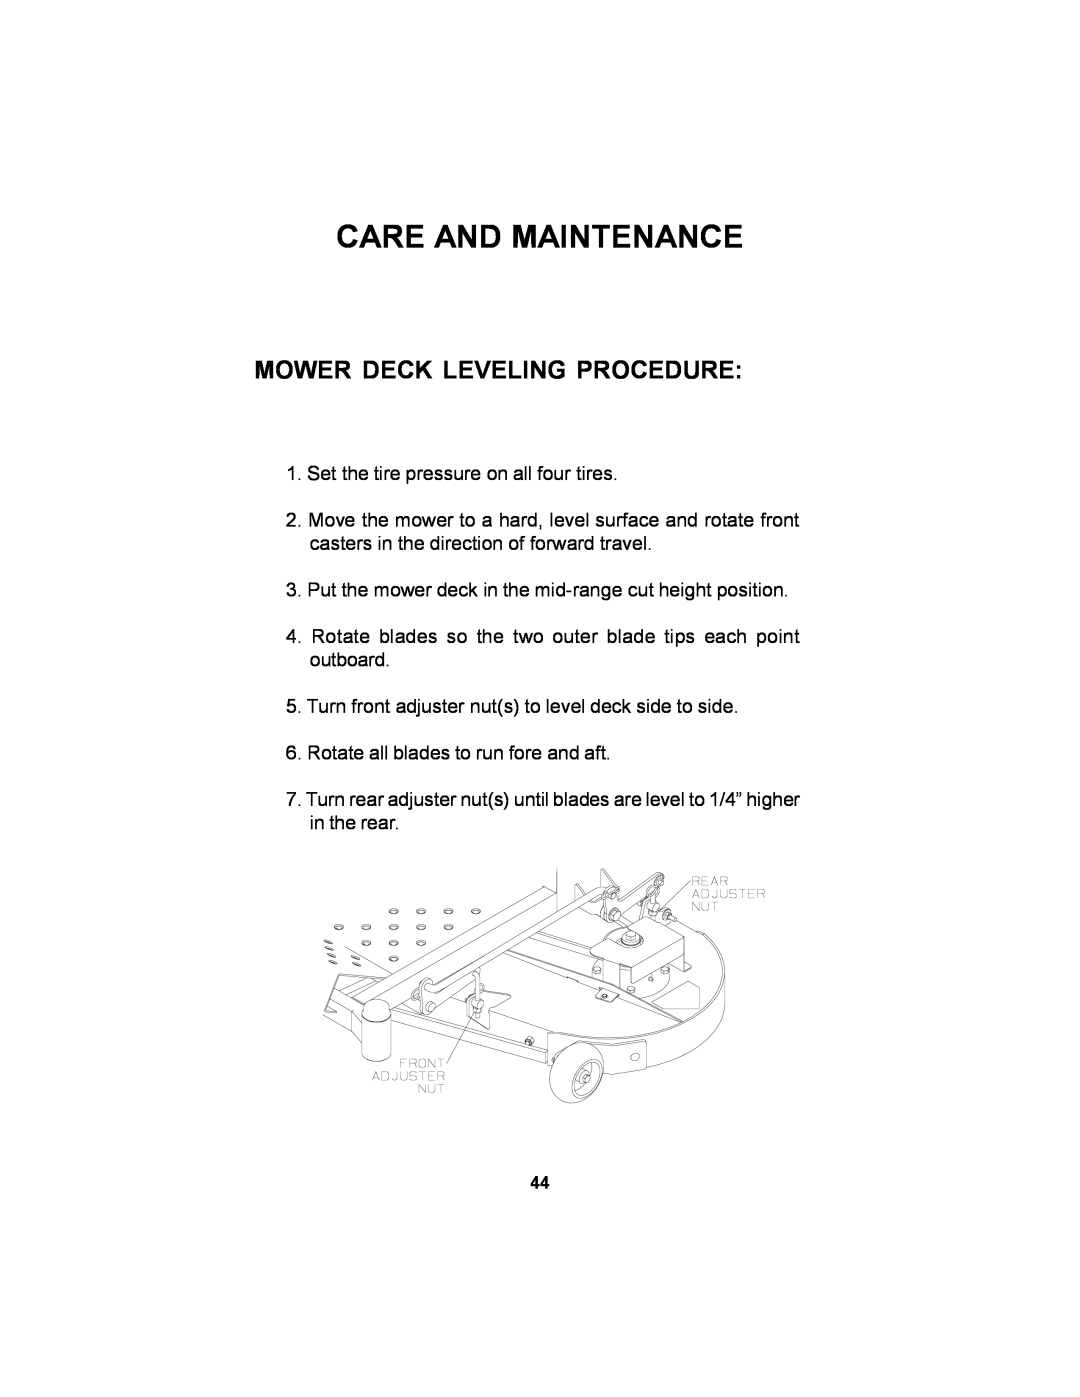 Dixon 36 manual Mower Deck Leveling Procedure, Care And Maintenance 